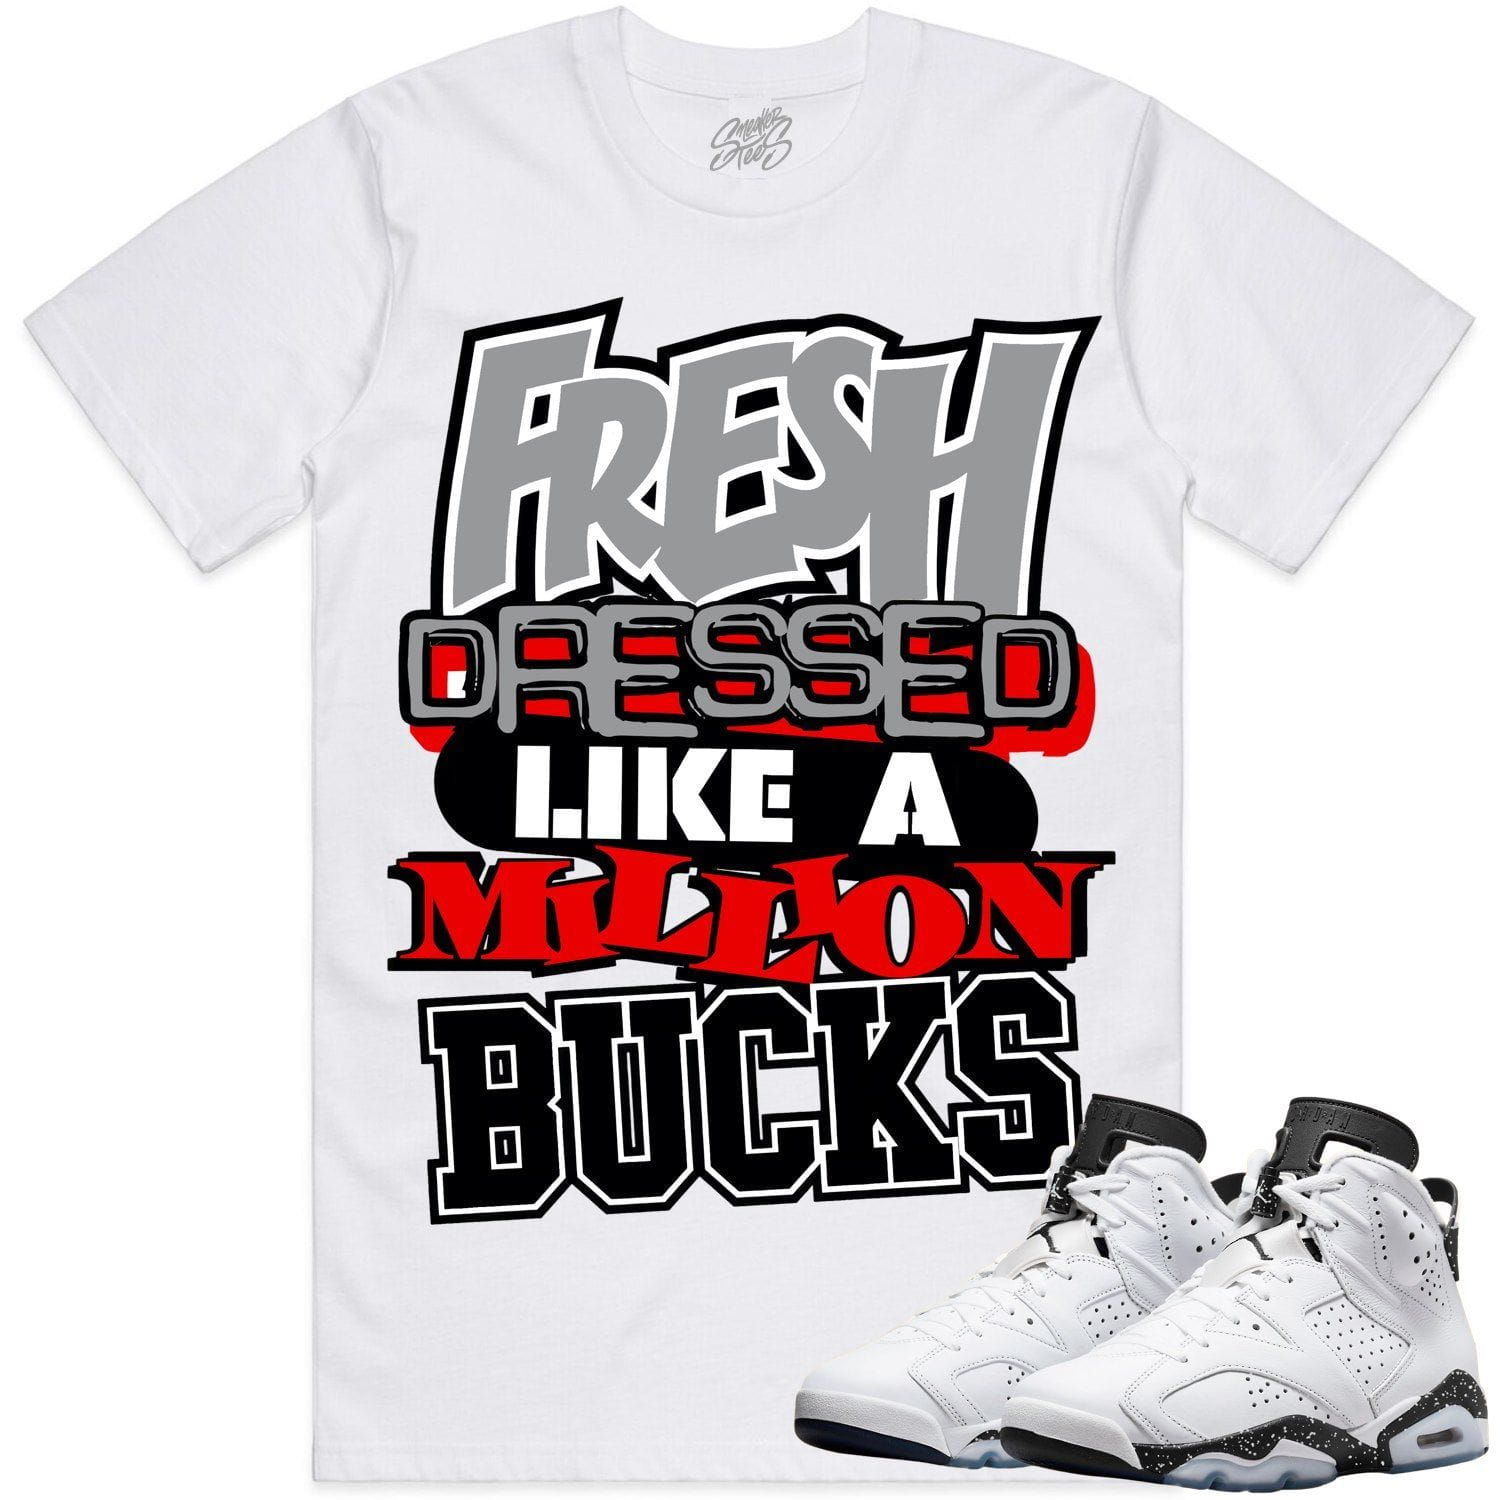 Oreo 6s Shirts - Jordan 6 Reverse Oreo 6s Sneaker Tees - Million Bucks